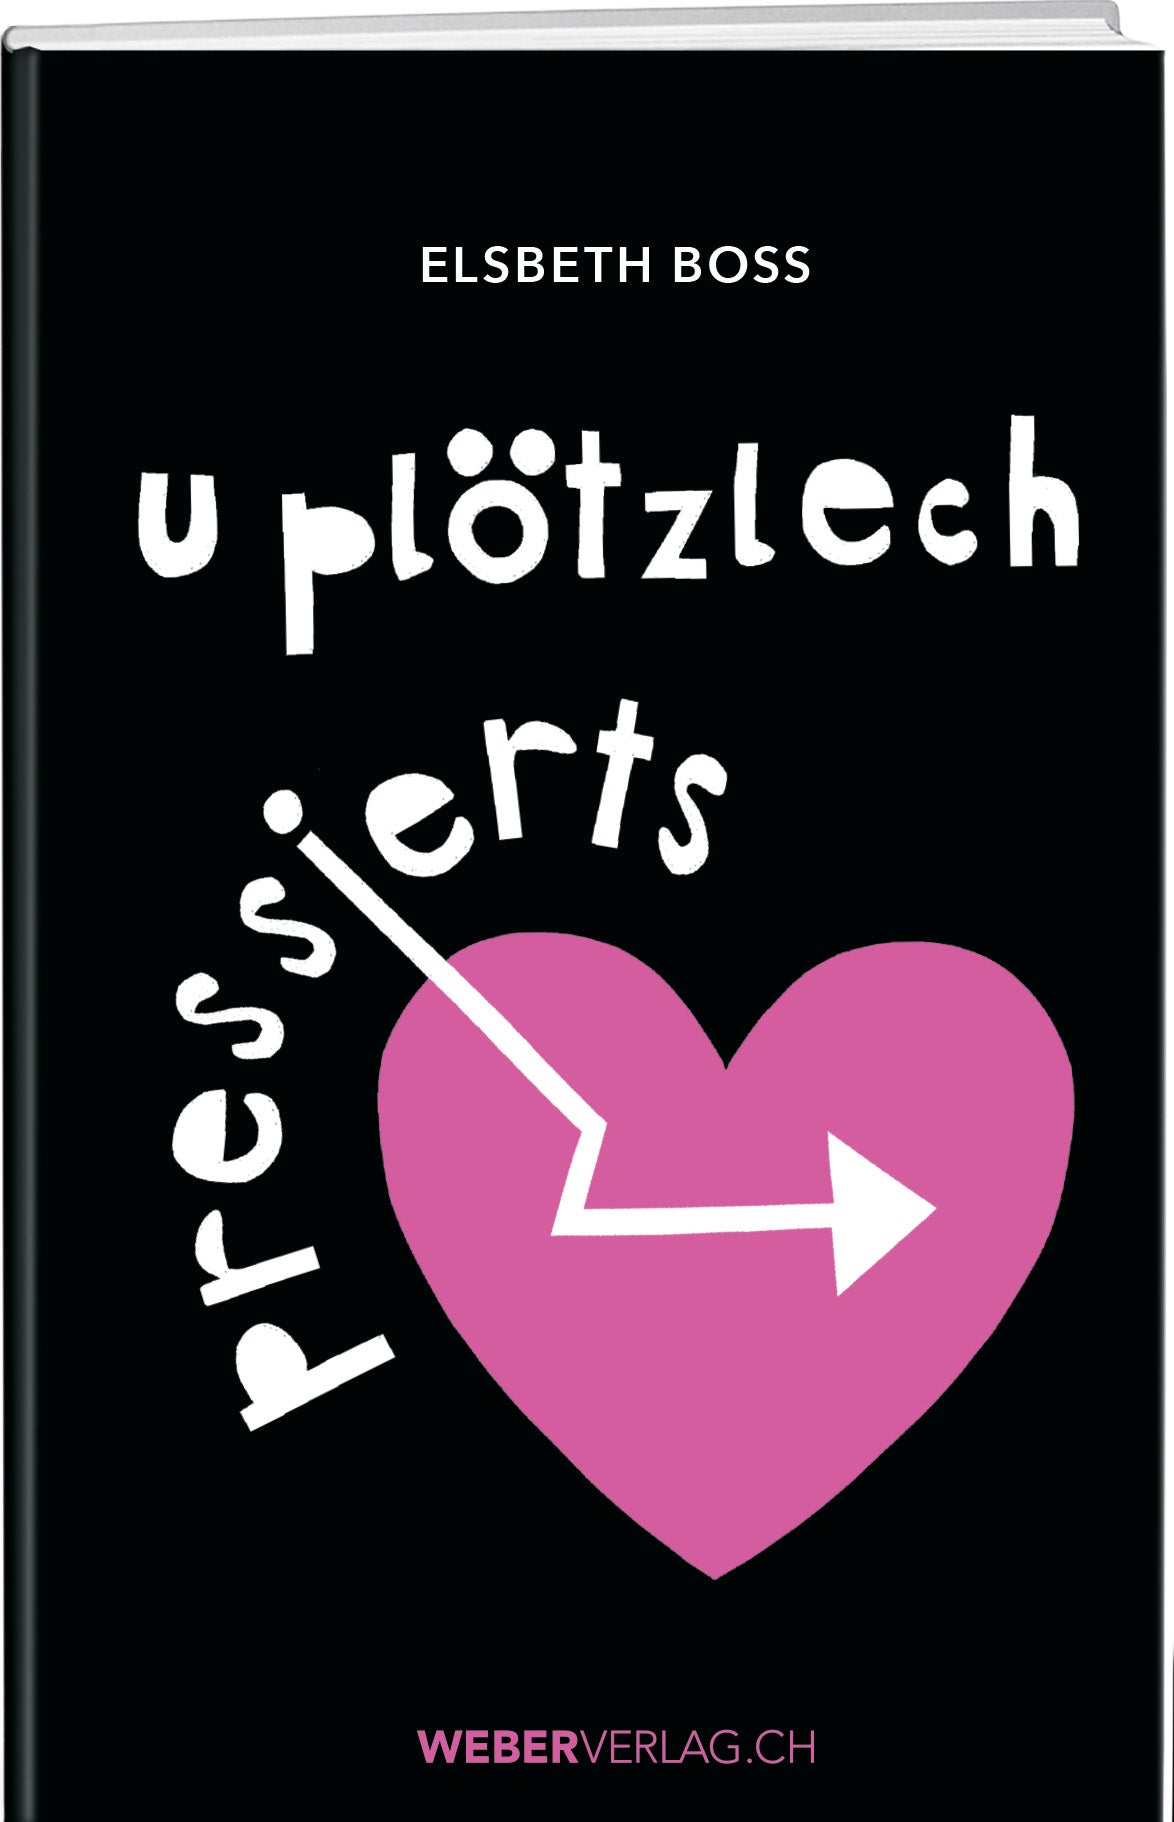 Elsbeth Boss | U plötzlech pressierts - • WEBER VERLAG